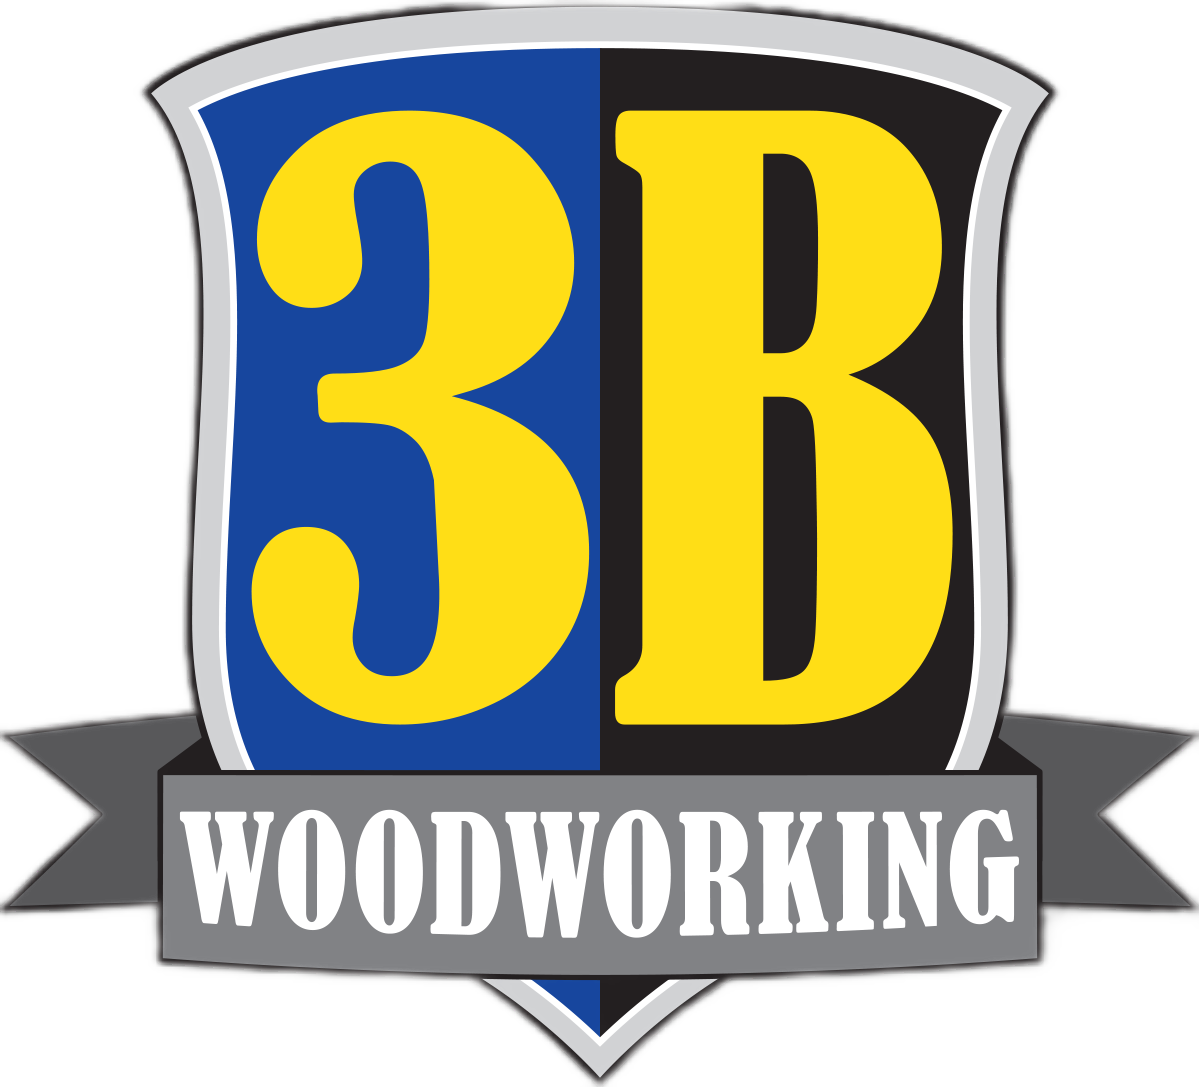 3B Woodworking Logo